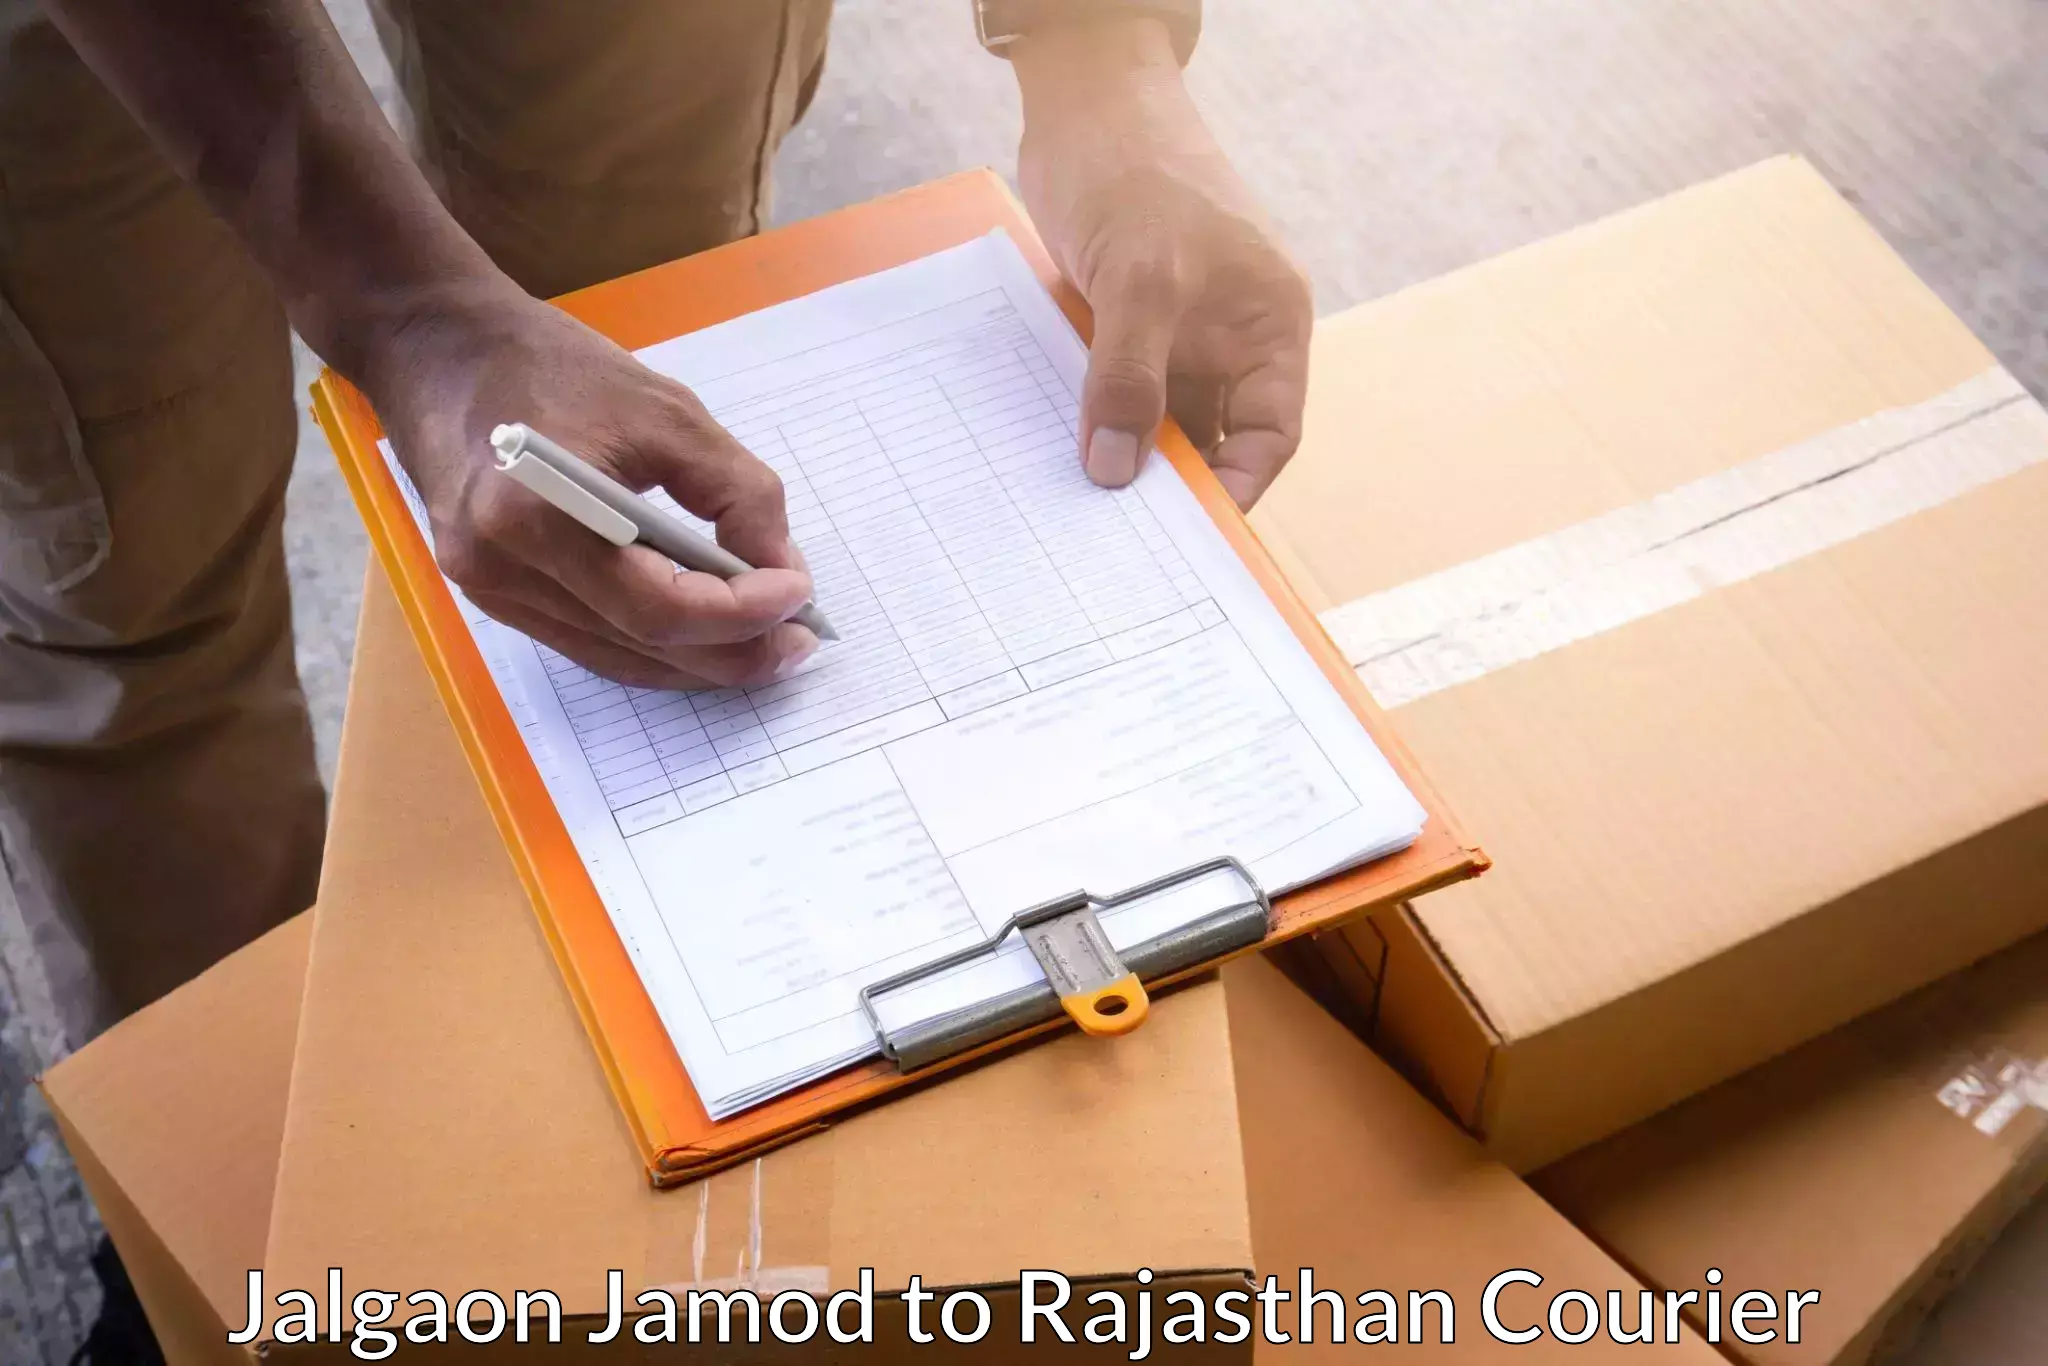 Courier service innovation Jalgaon Jamod to Abu Road